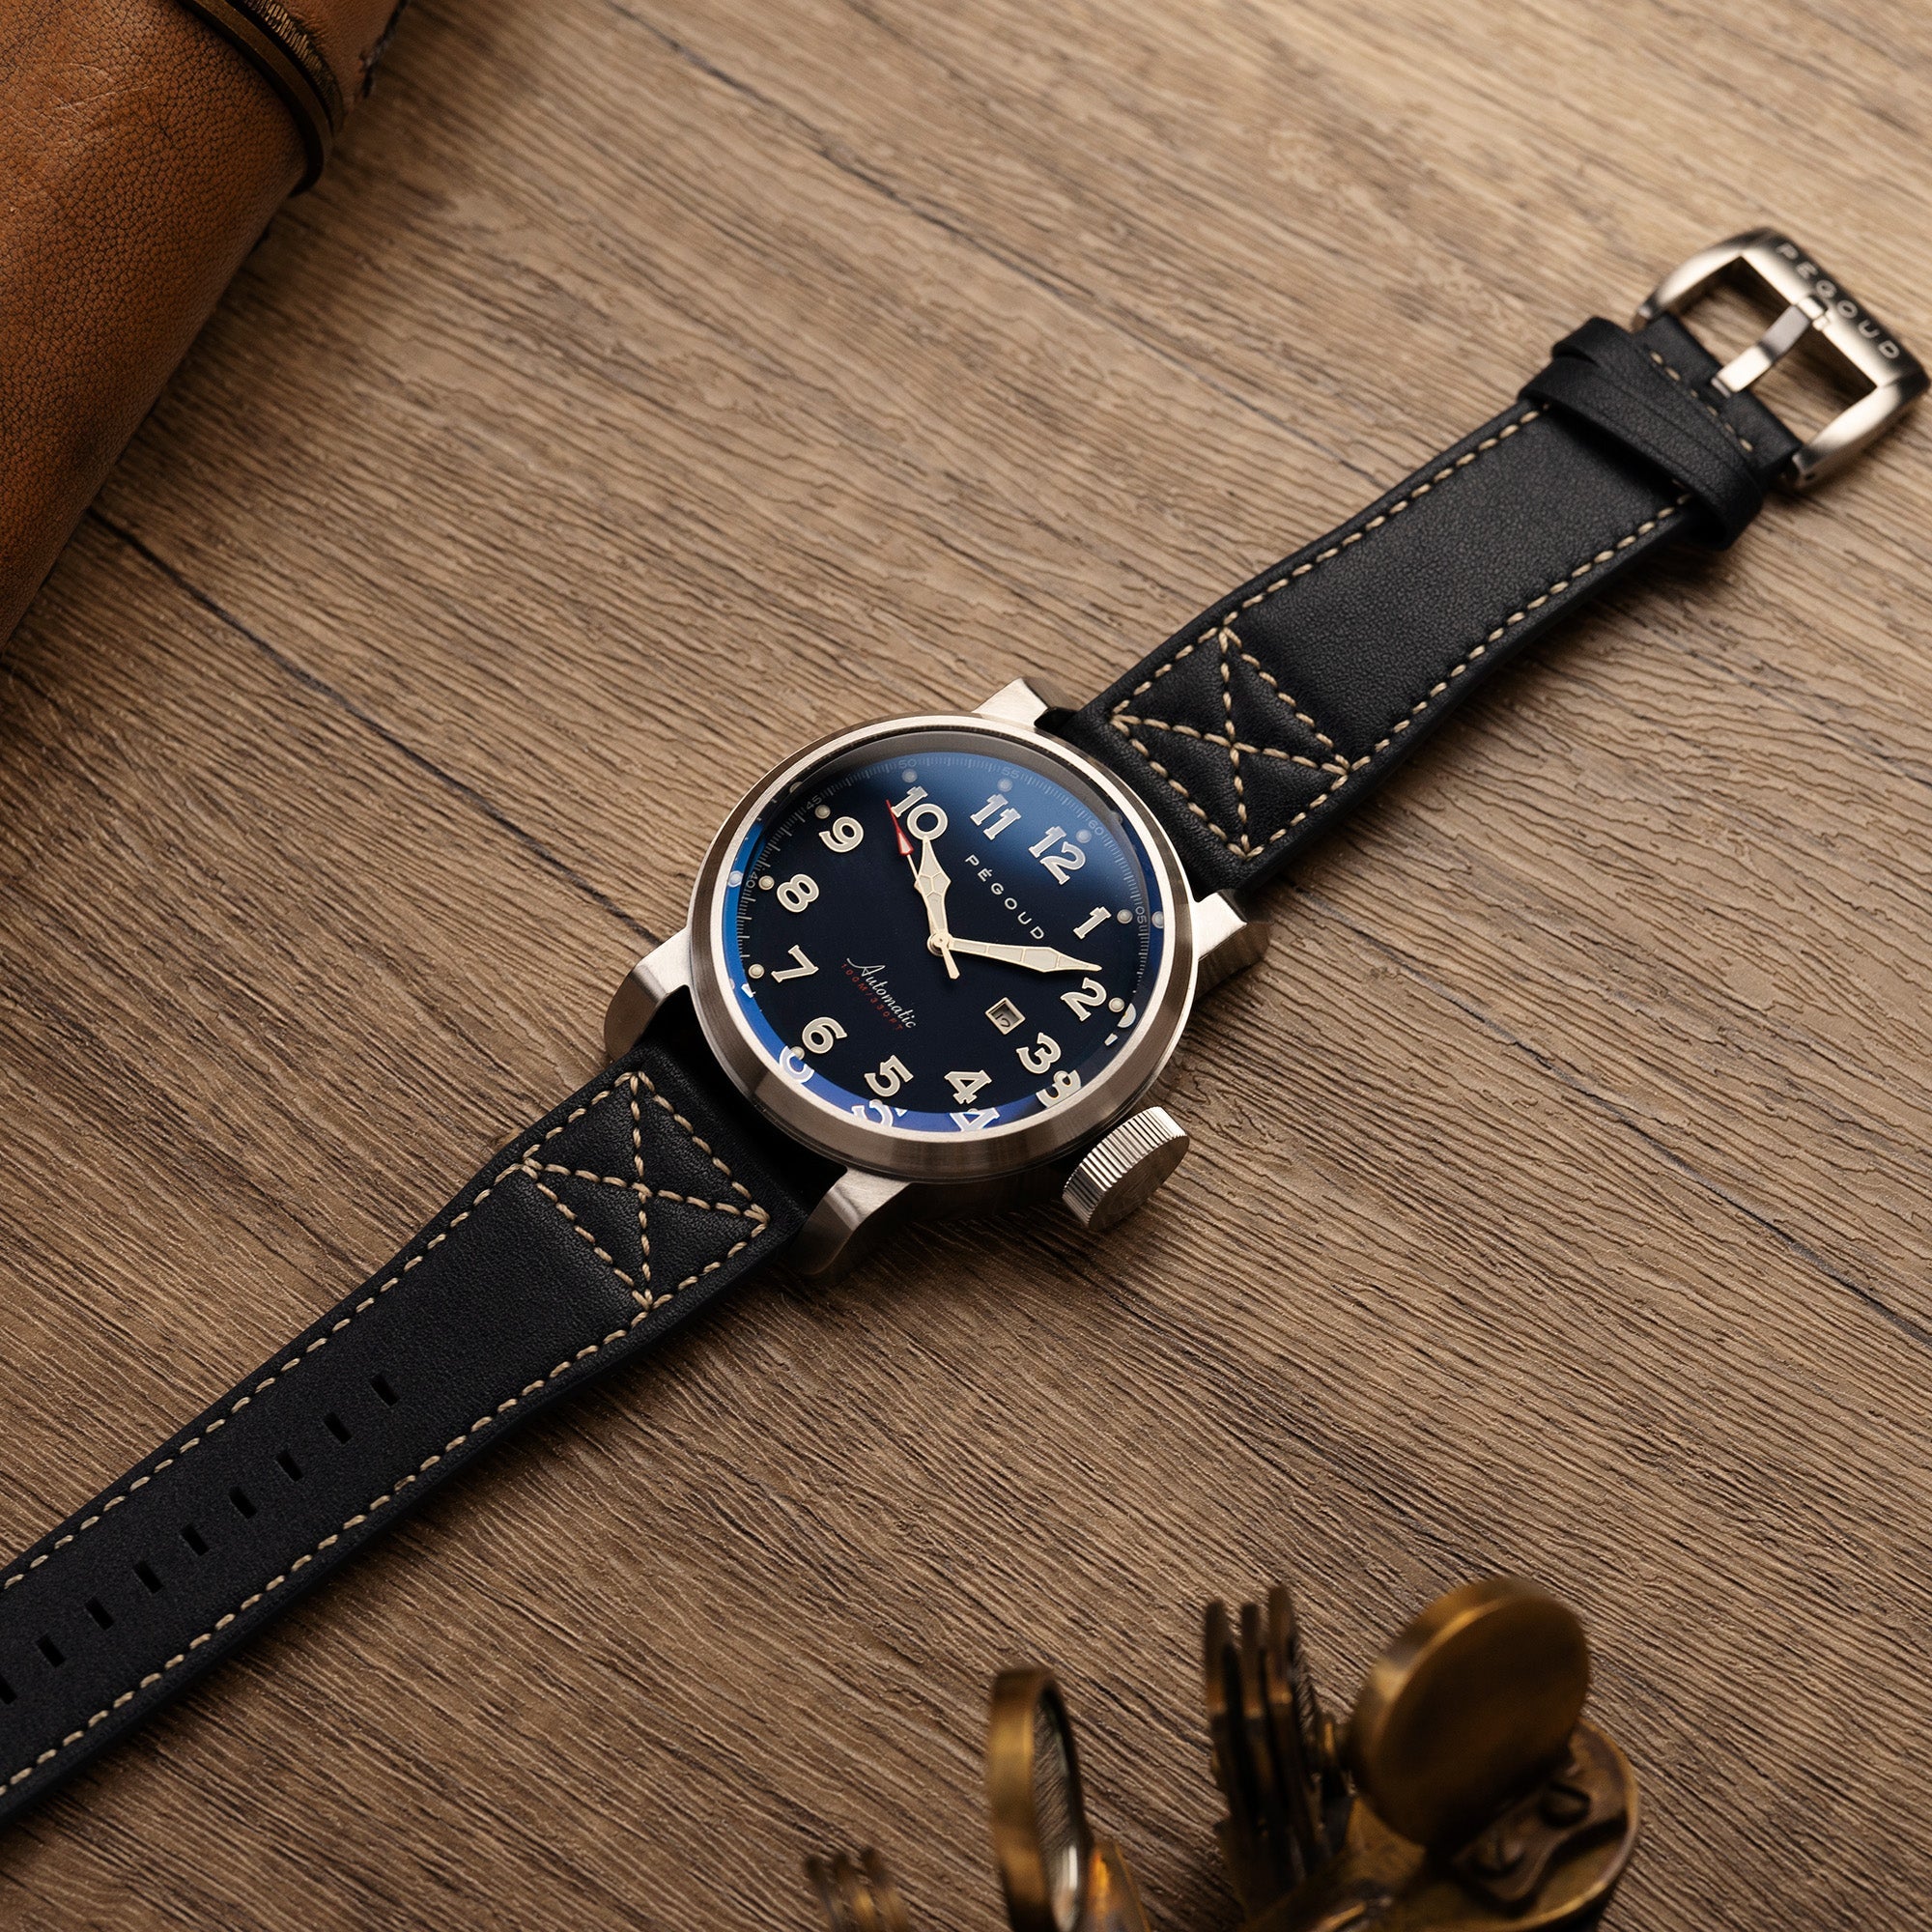 PEGOUD Pegoud Celestin Japanese Automatic Men's Oxford Blue Watch PG-9013-03